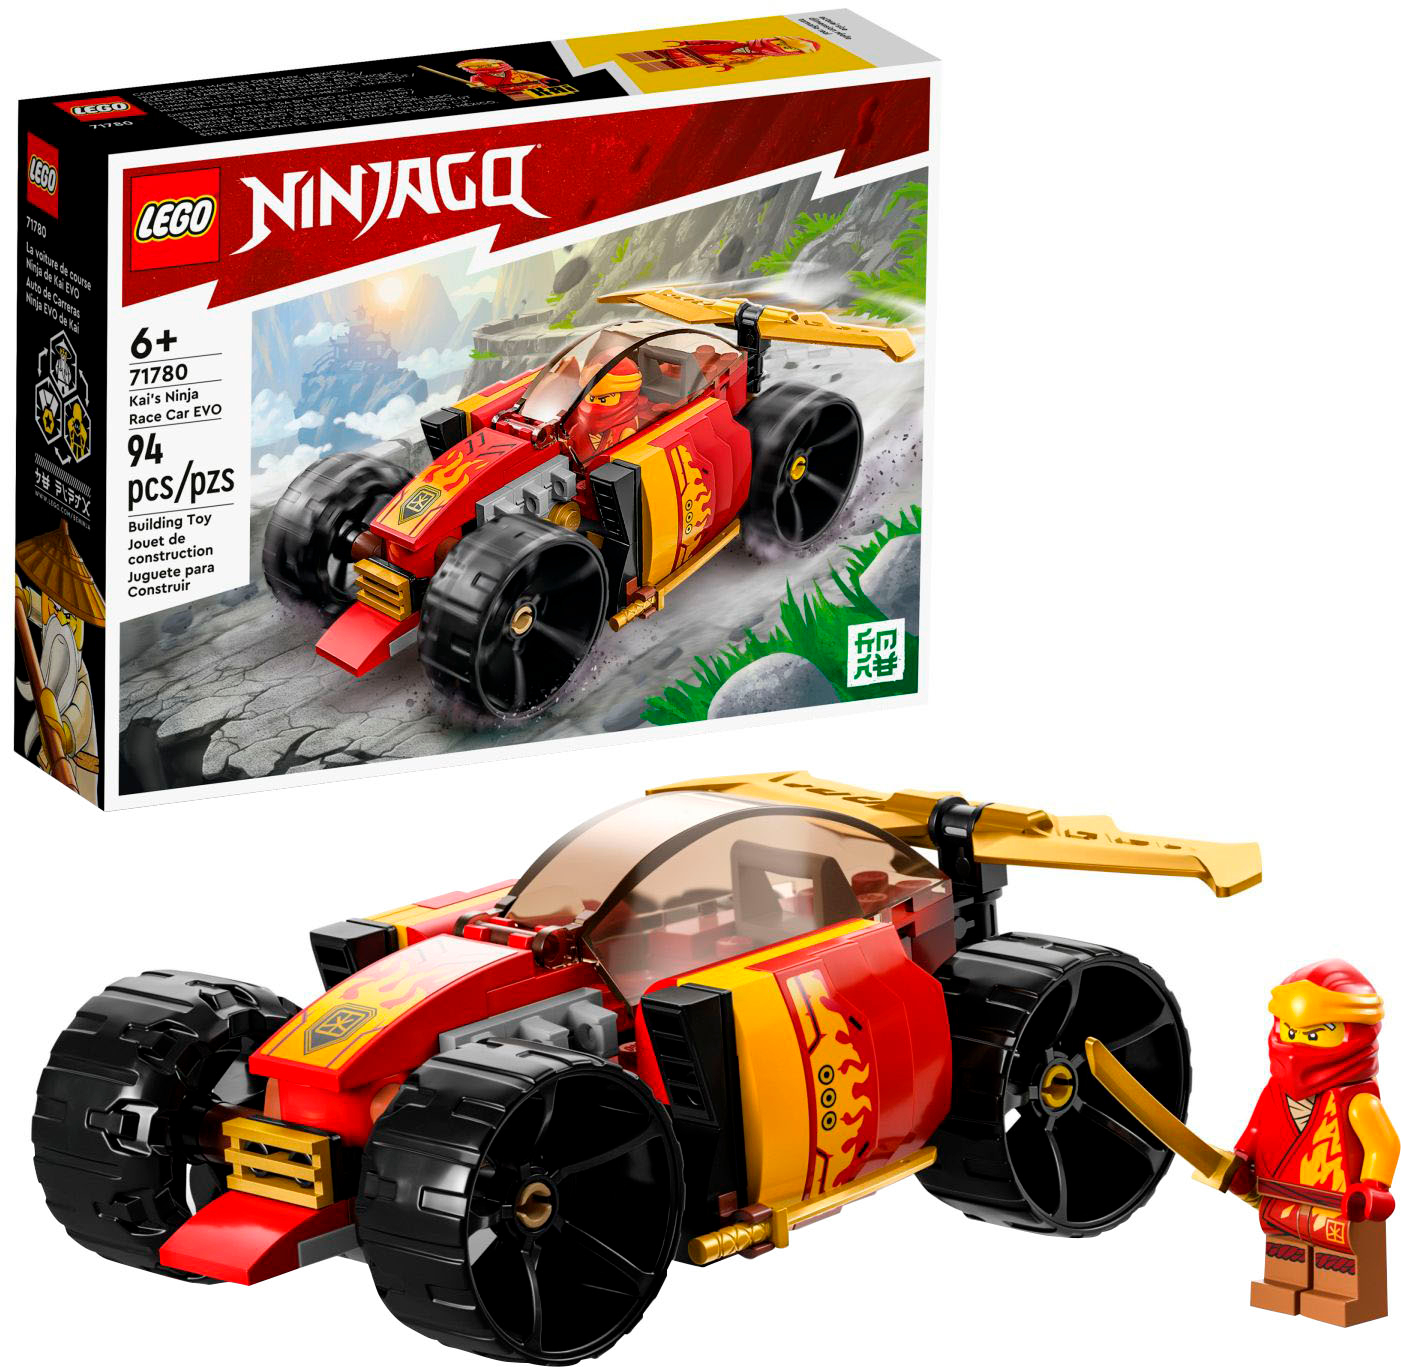 Valkuilen Chemie Poëzie LEGO NINJAGO Kai's Ninja Race Car EVO 71780 6420690 - Best Buy